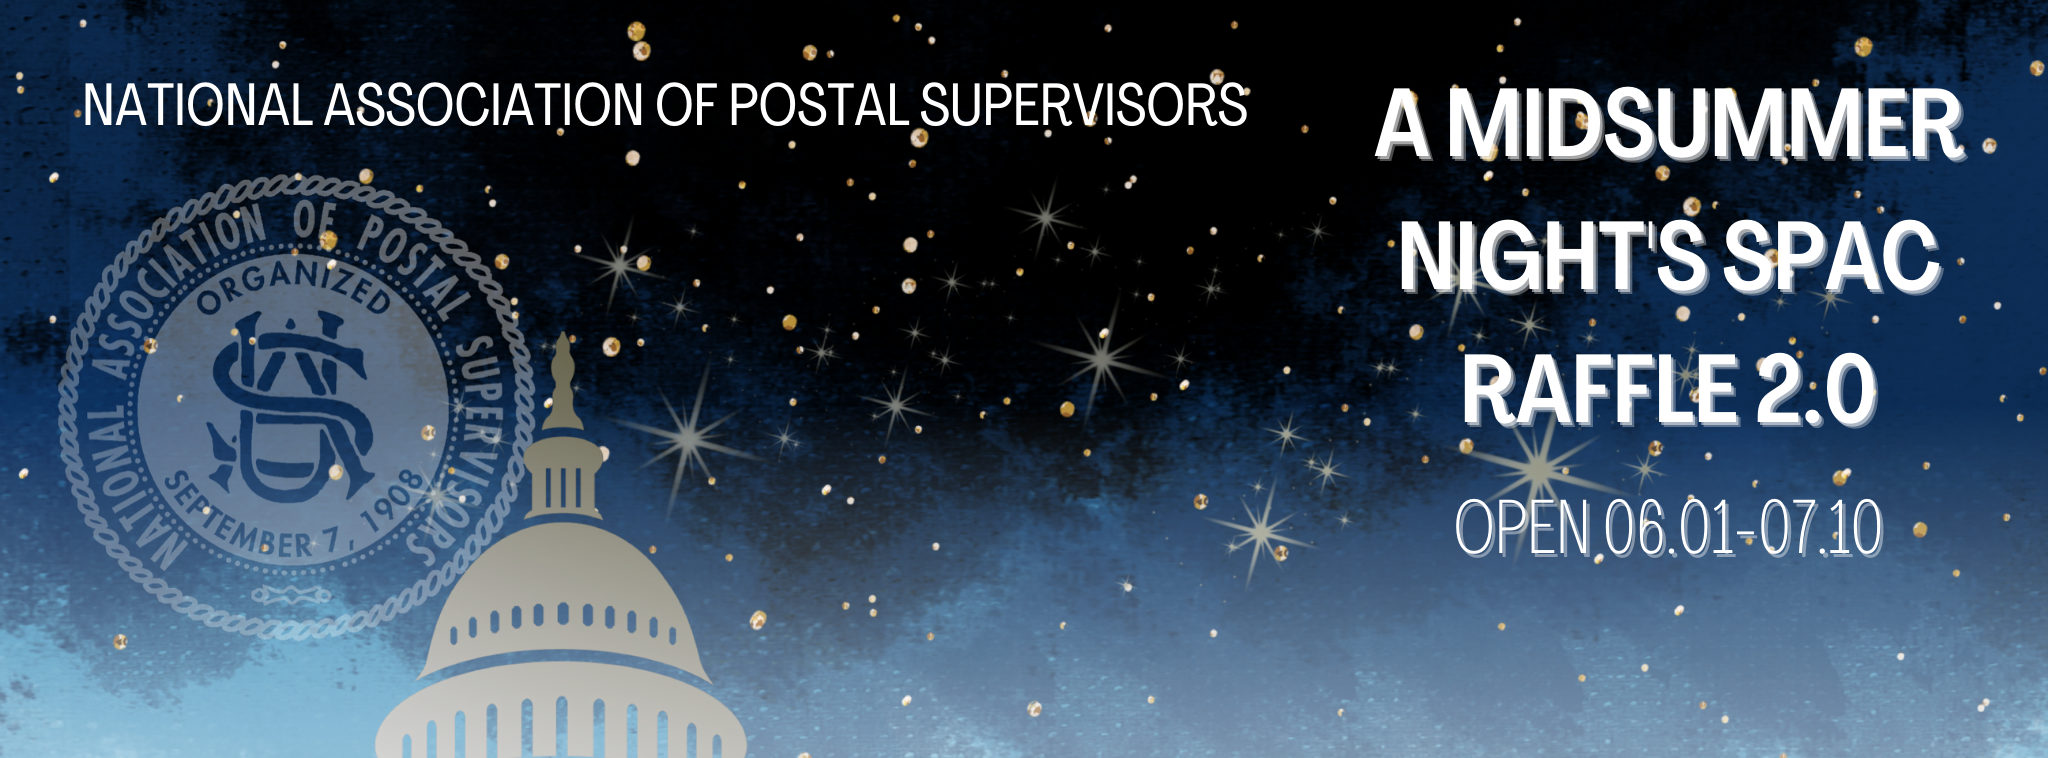 National Association of Postal Supervisors